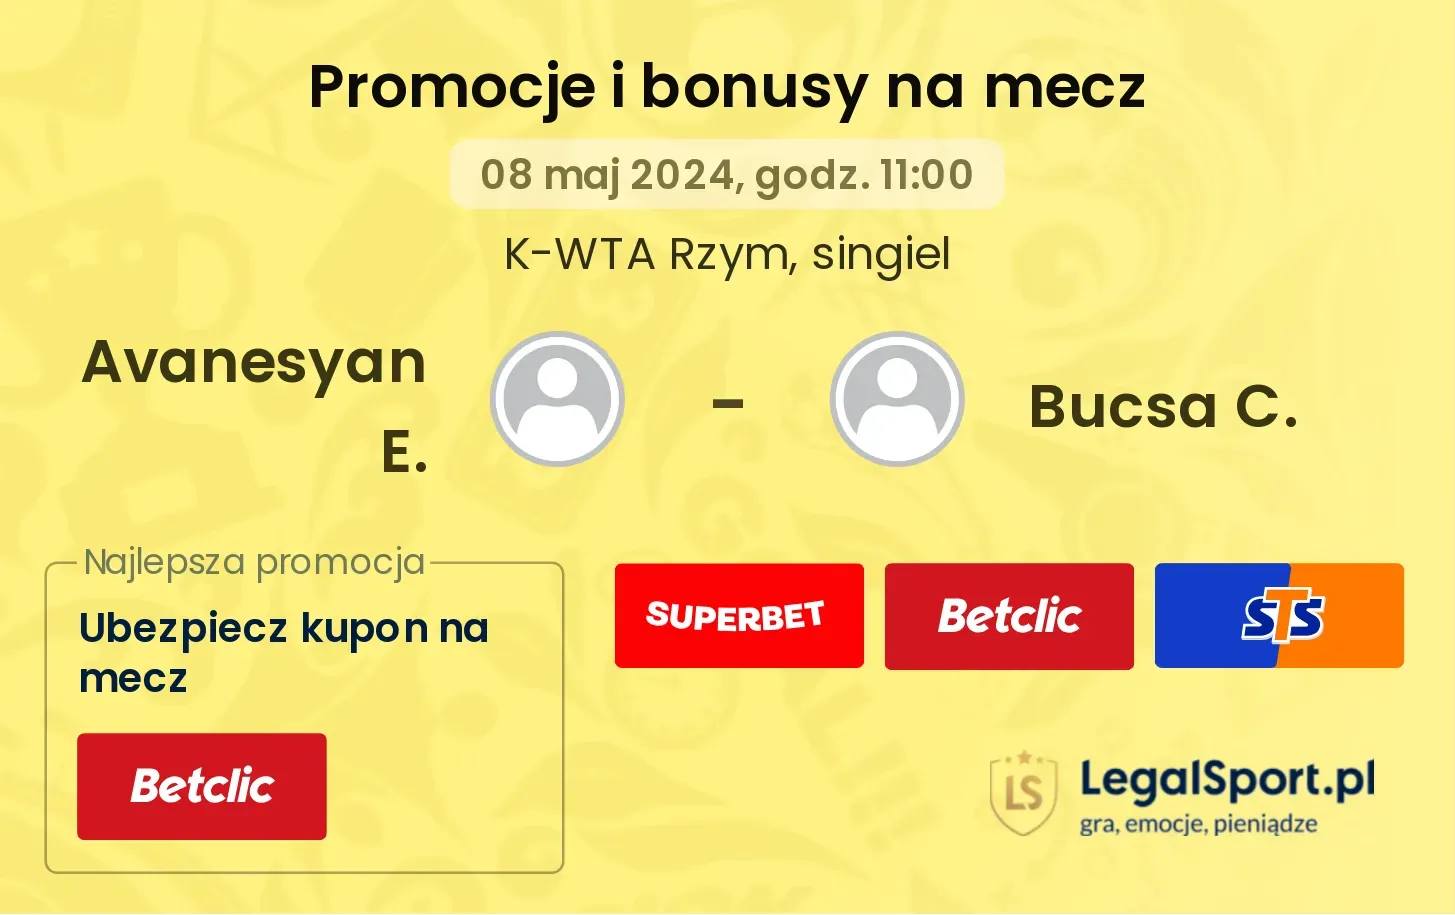 Avanesyan E. - Bucsa C. promocje bonusy na mecz